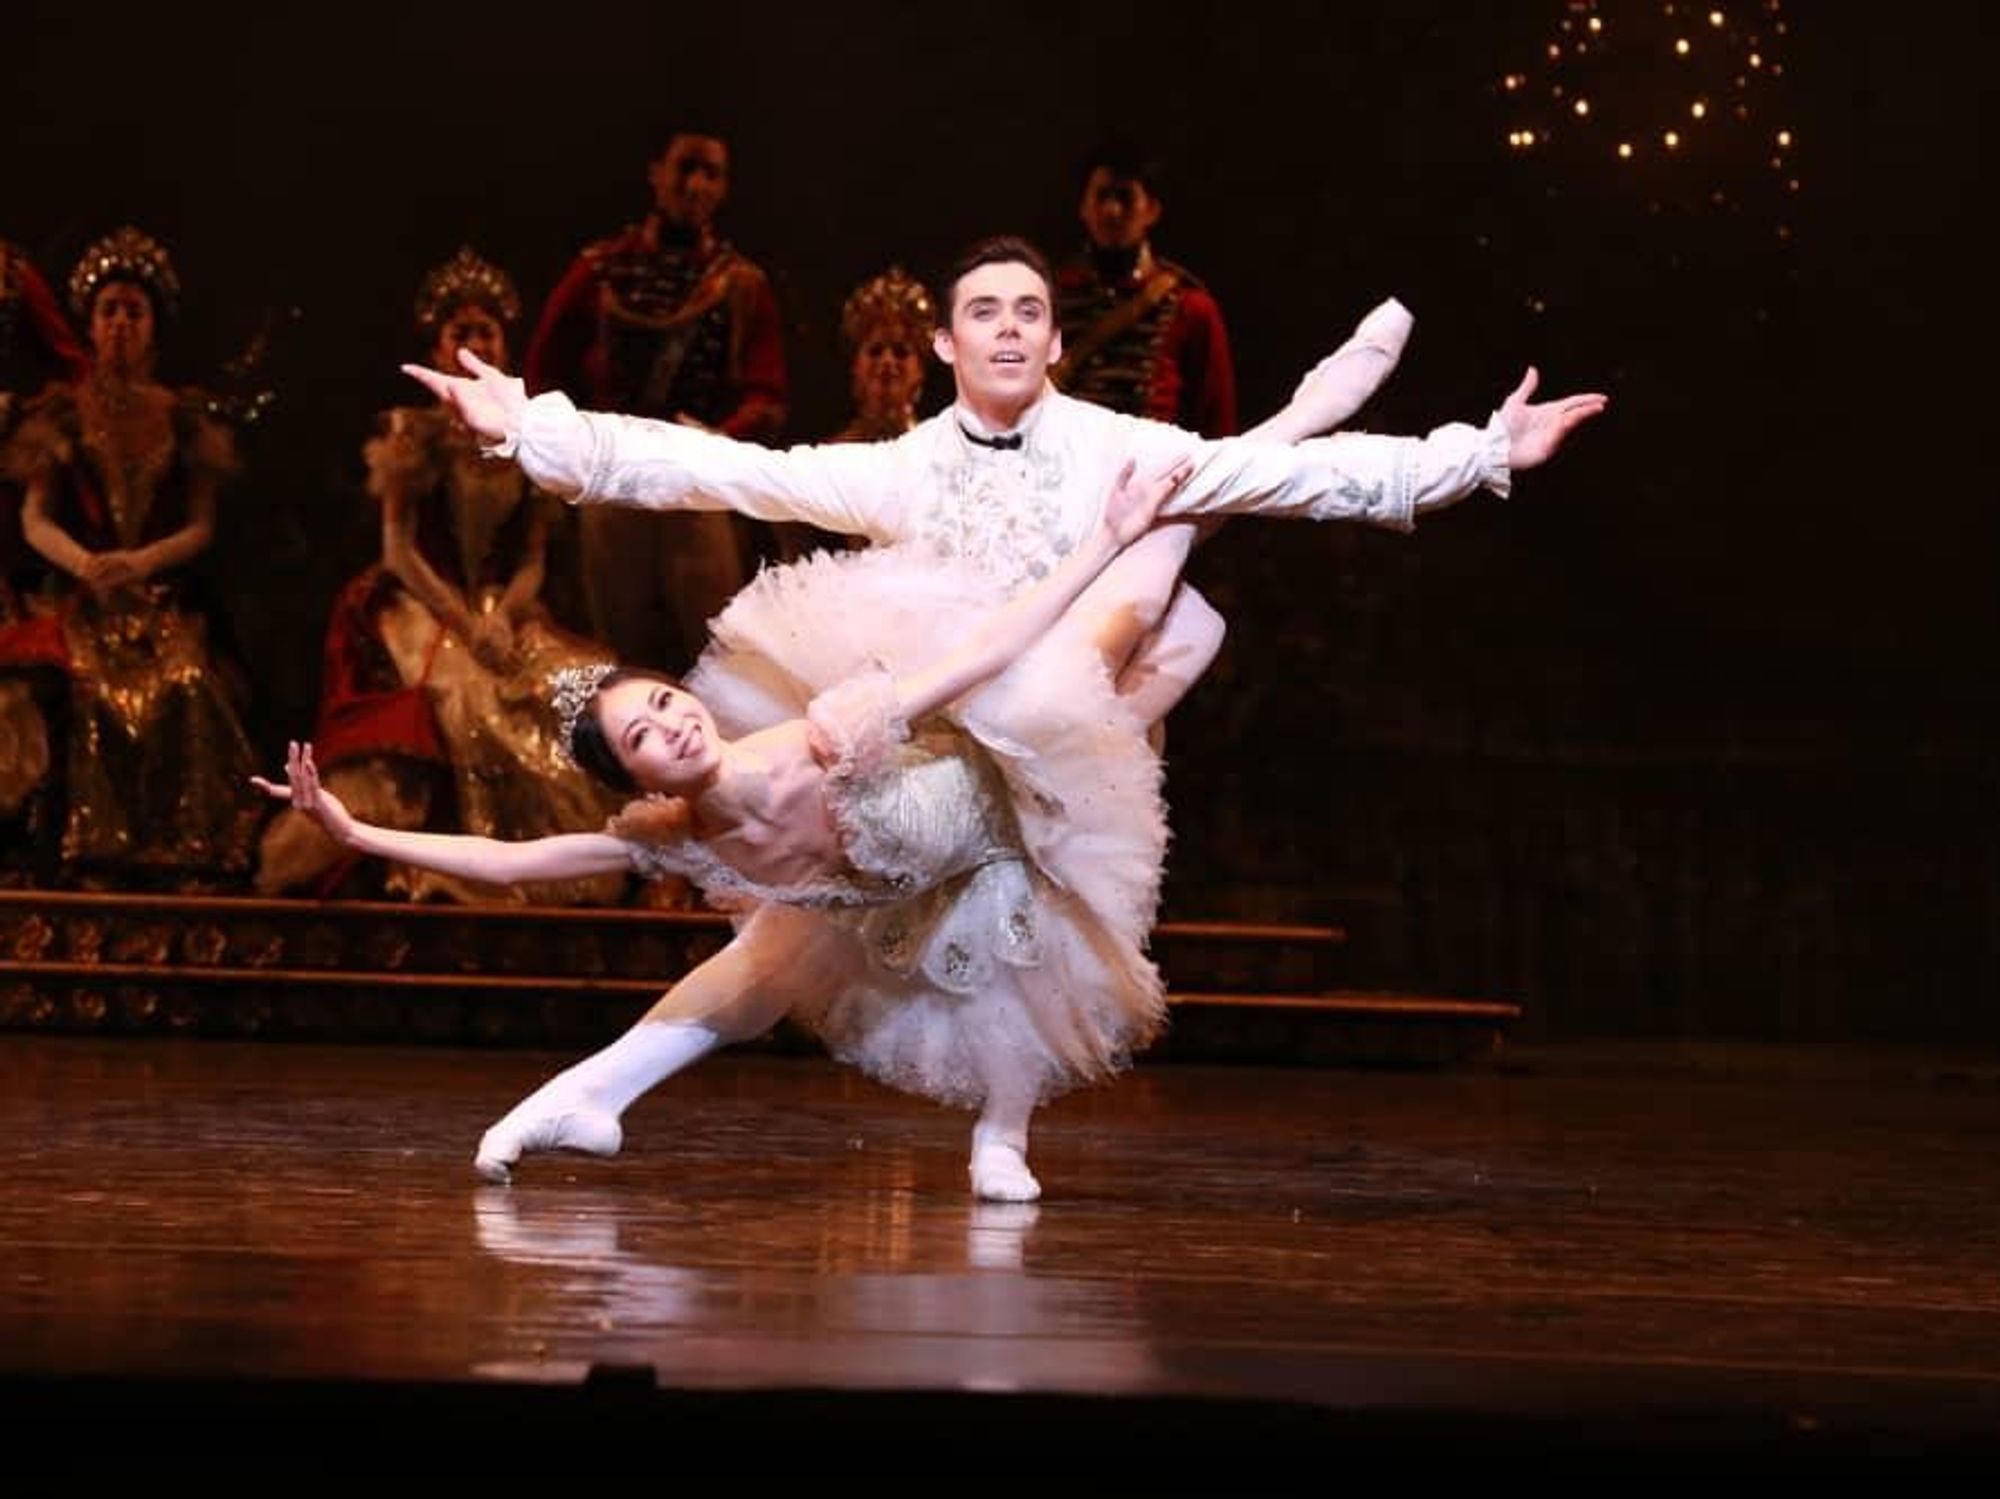 Houston Ballet principals Connor Walsh as Price Florimund and Yuriko Kajiya as Princess Aurora in Ben Stevenson’s The Sleeping Beauty